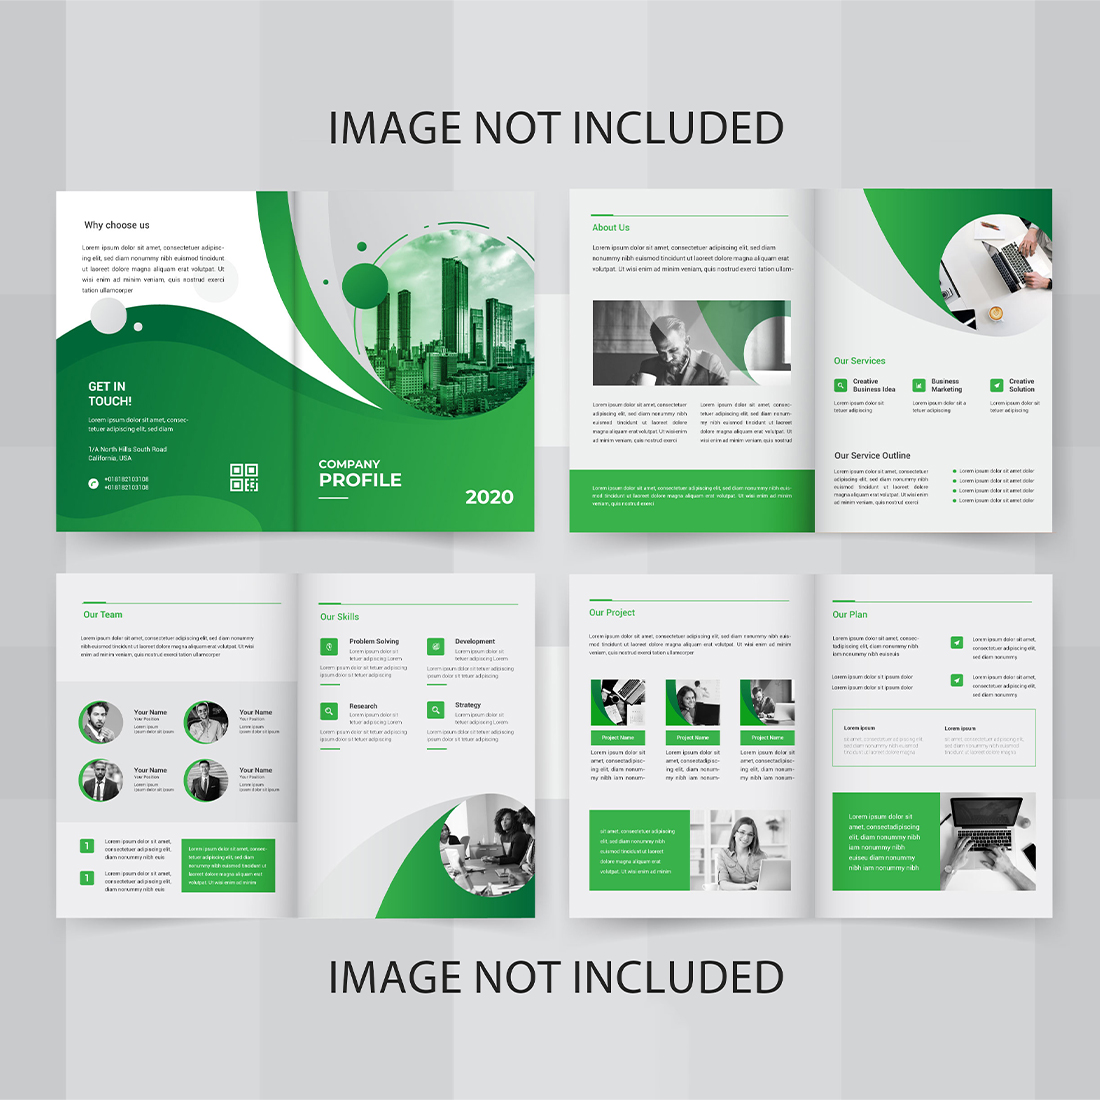 Vector creative company profile template design preview image.